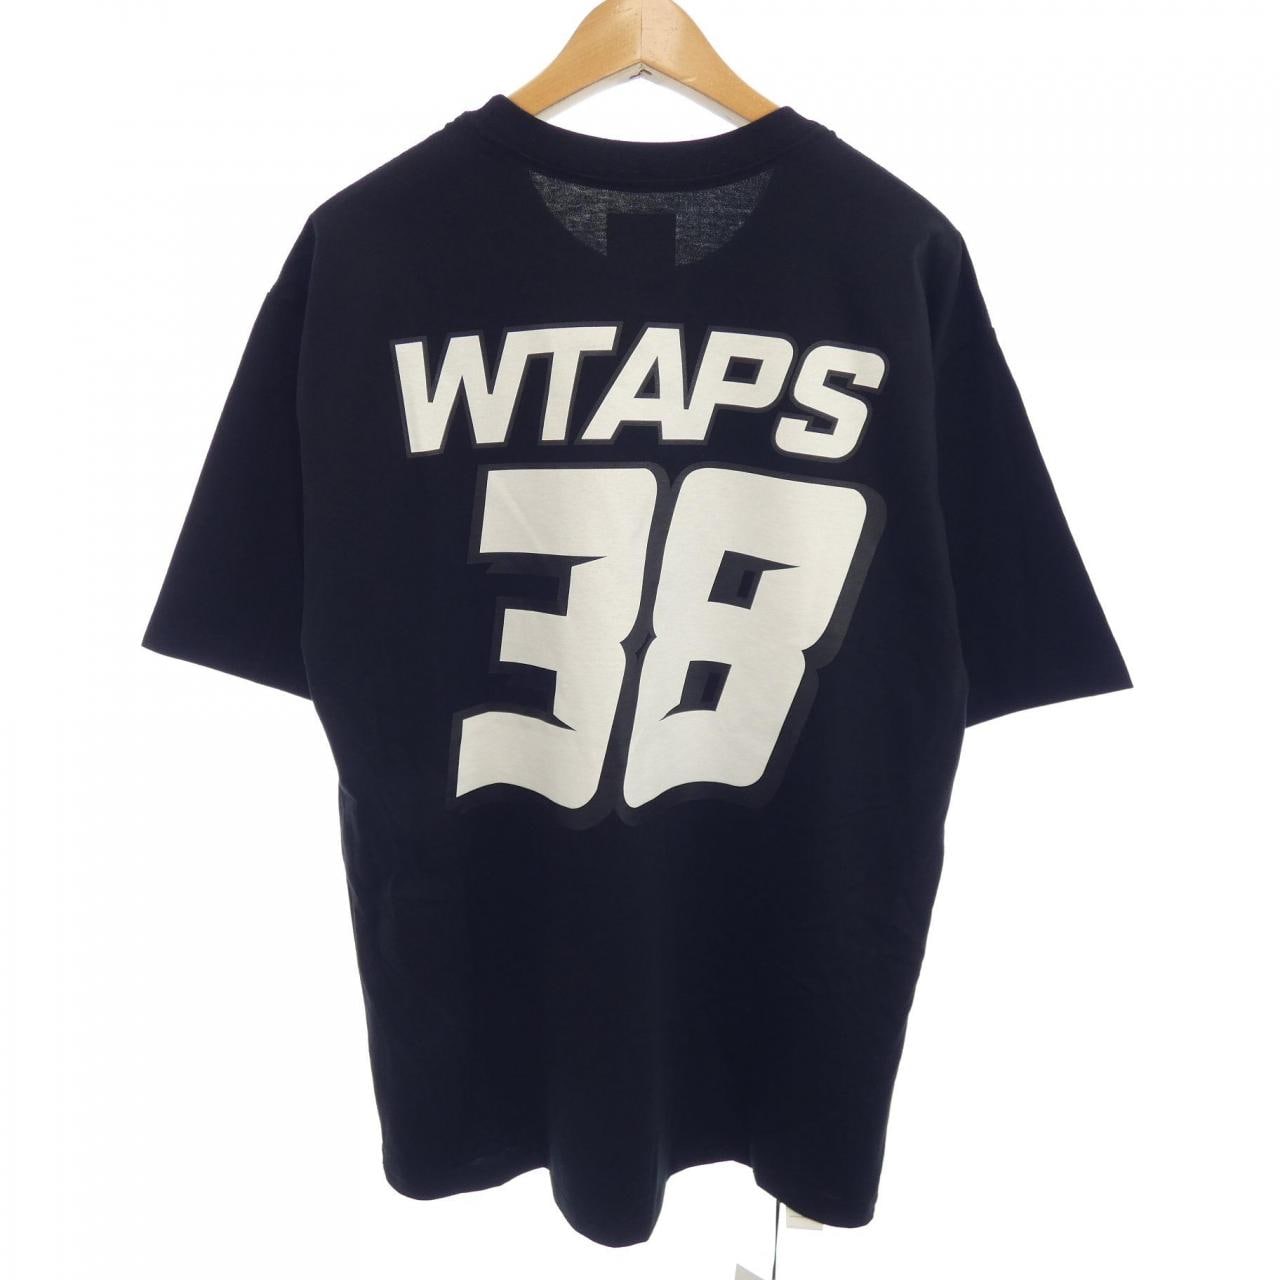 Double Taps WTAPS T-shirt